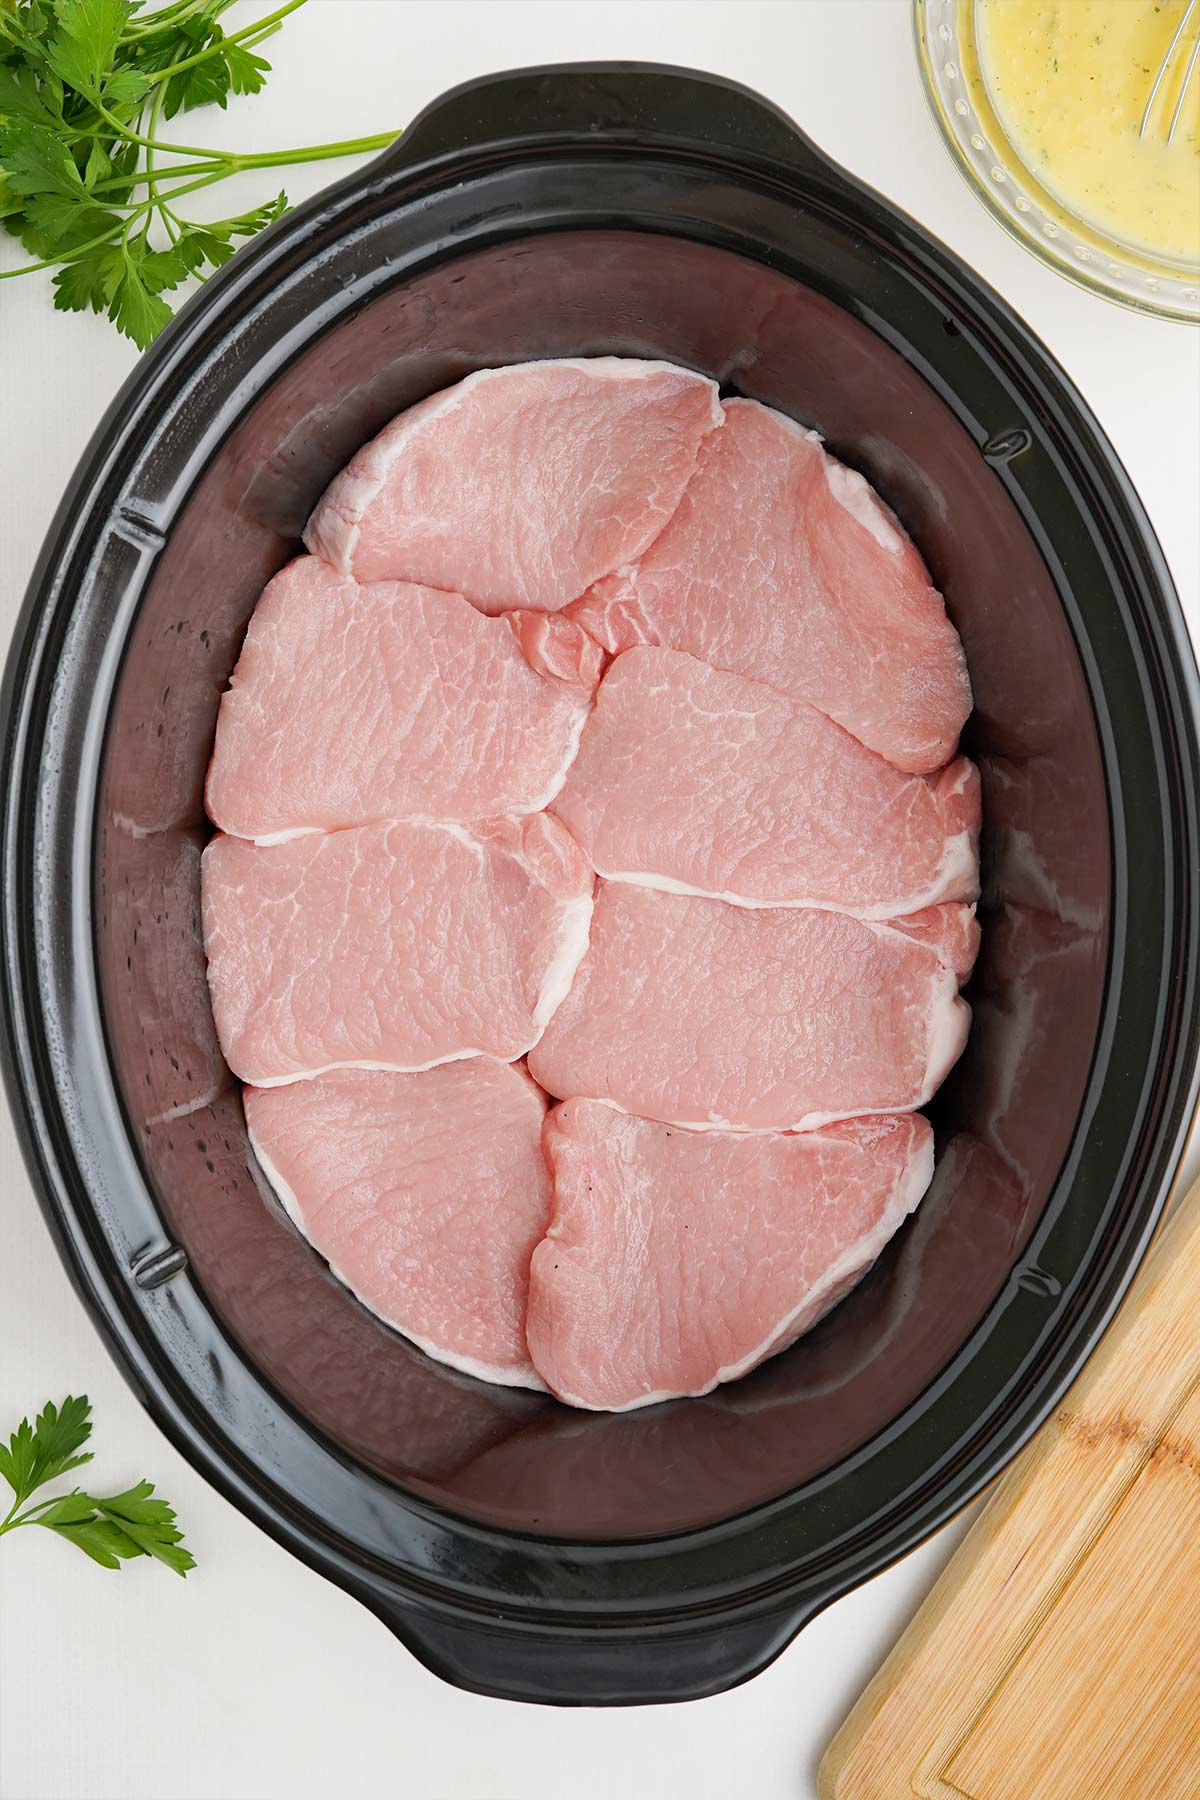 Pork chops layered in the bottom of crockpot.